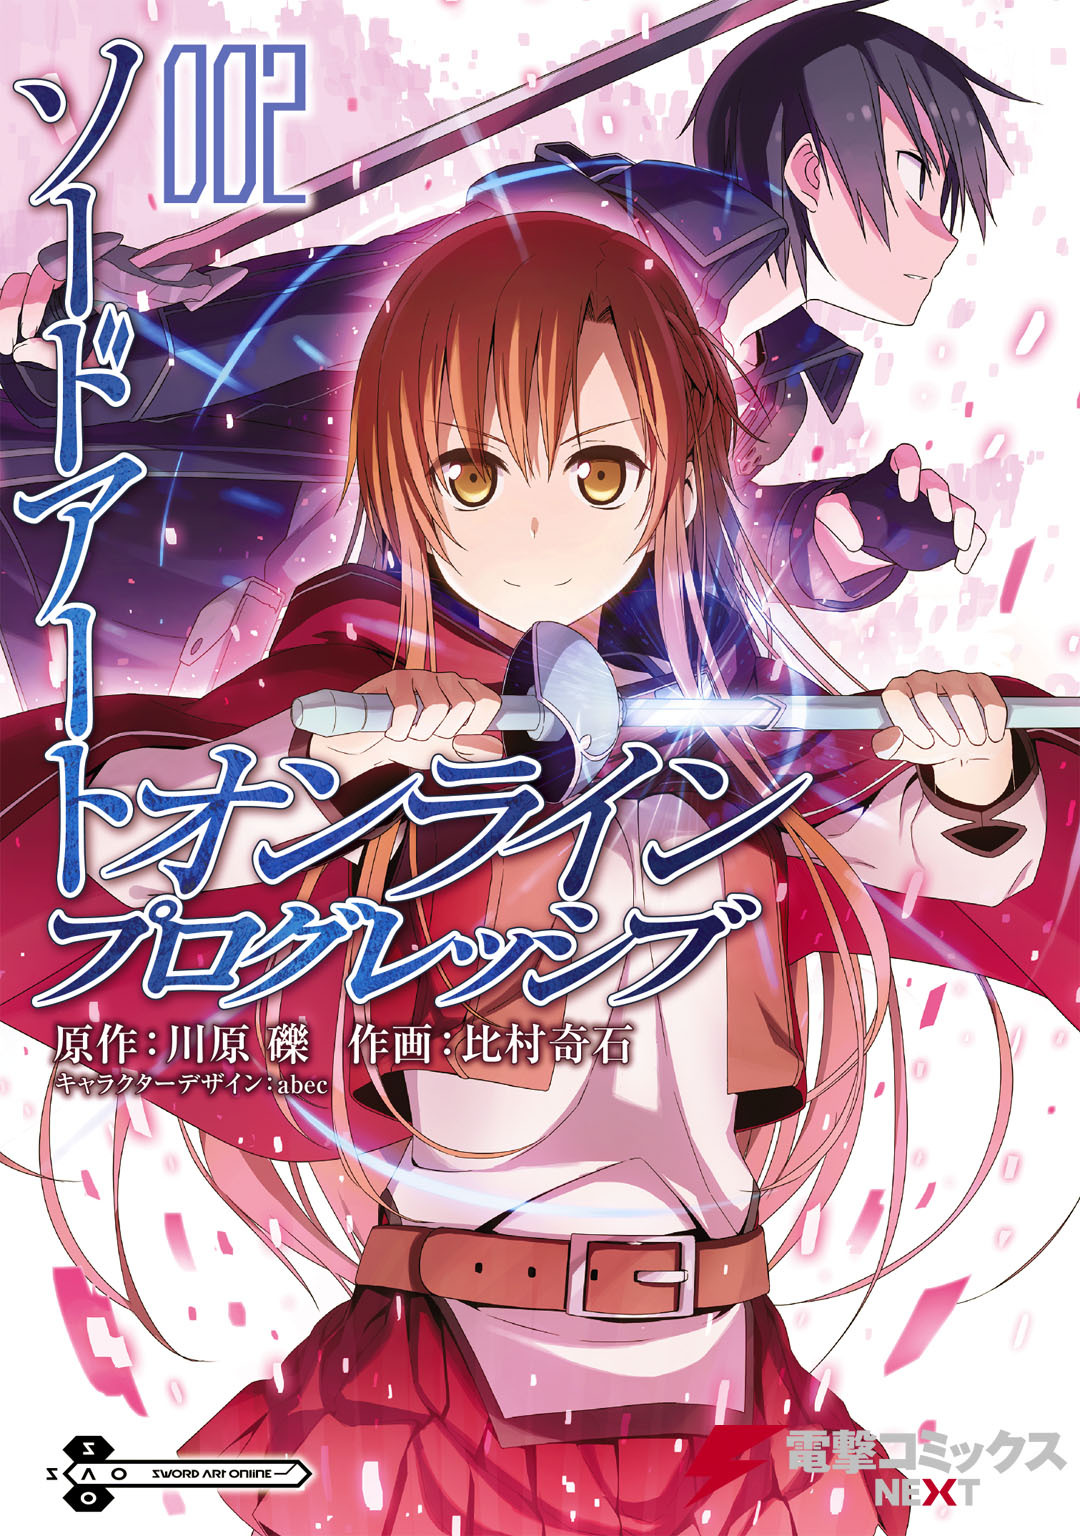 Sword Art Online Progressive vol 2 comic manga anime Asuna Japanese Book